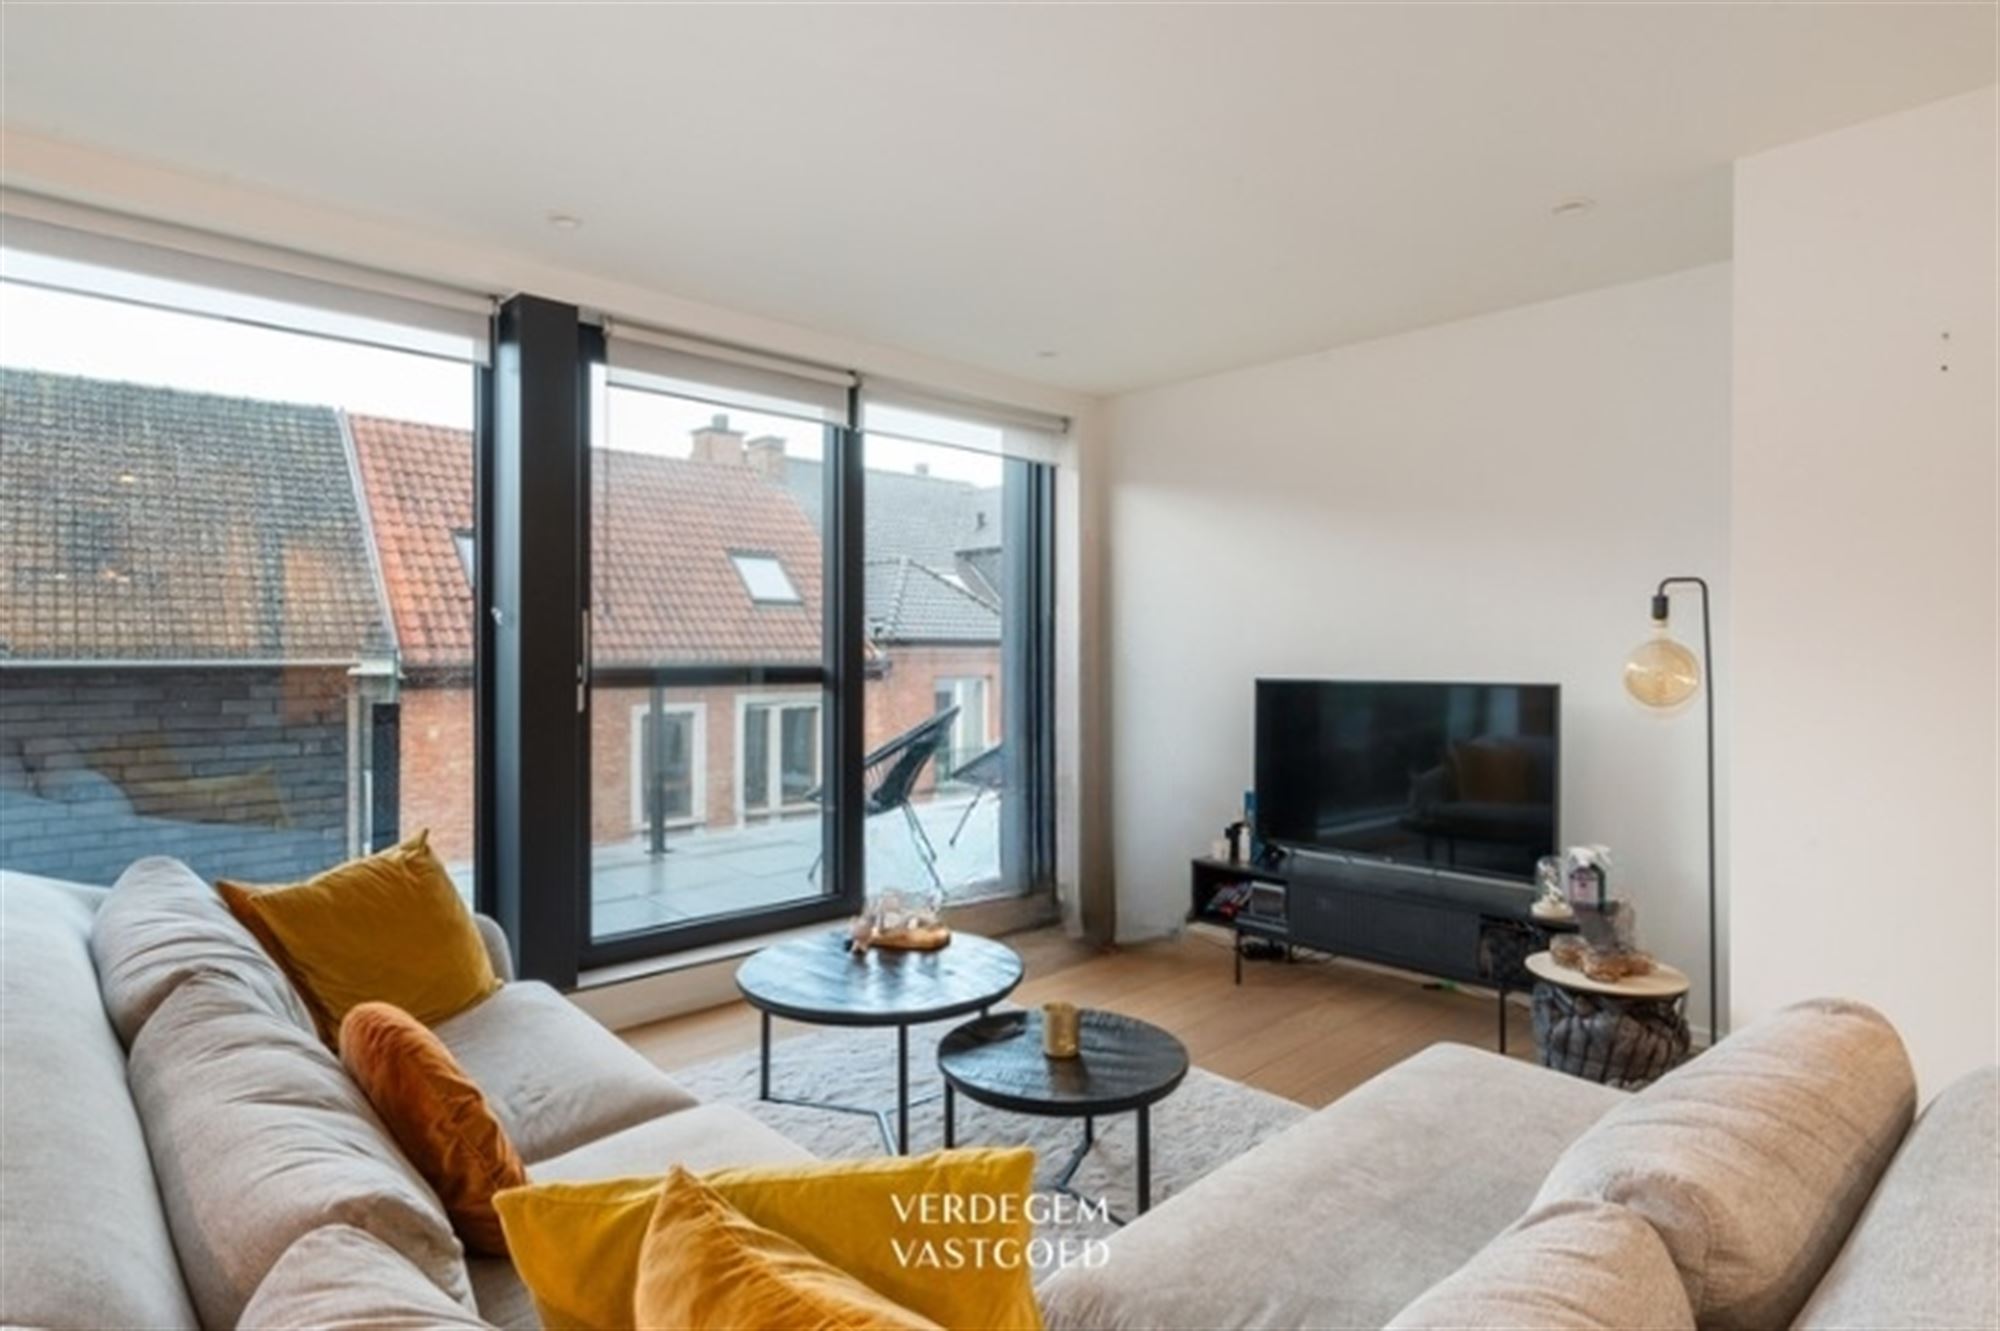 Comfort en kwaliteit: appartement met Bulthaup keuken en warmtepomp met geothermie foto 3